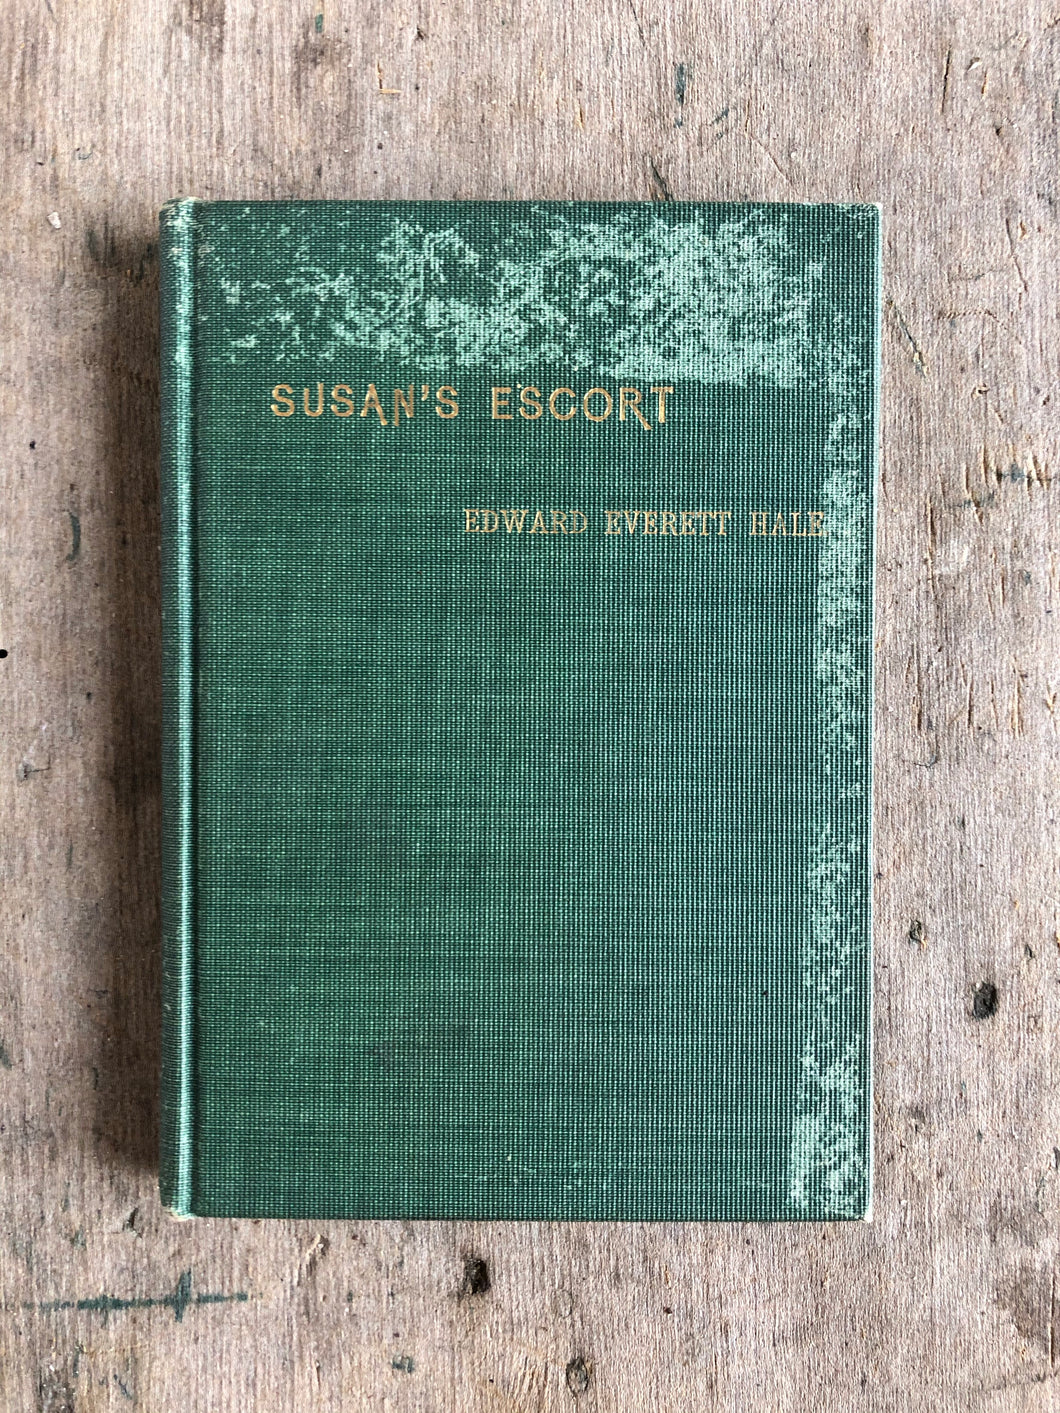 Susan’s Escort by Edward Everett Hale